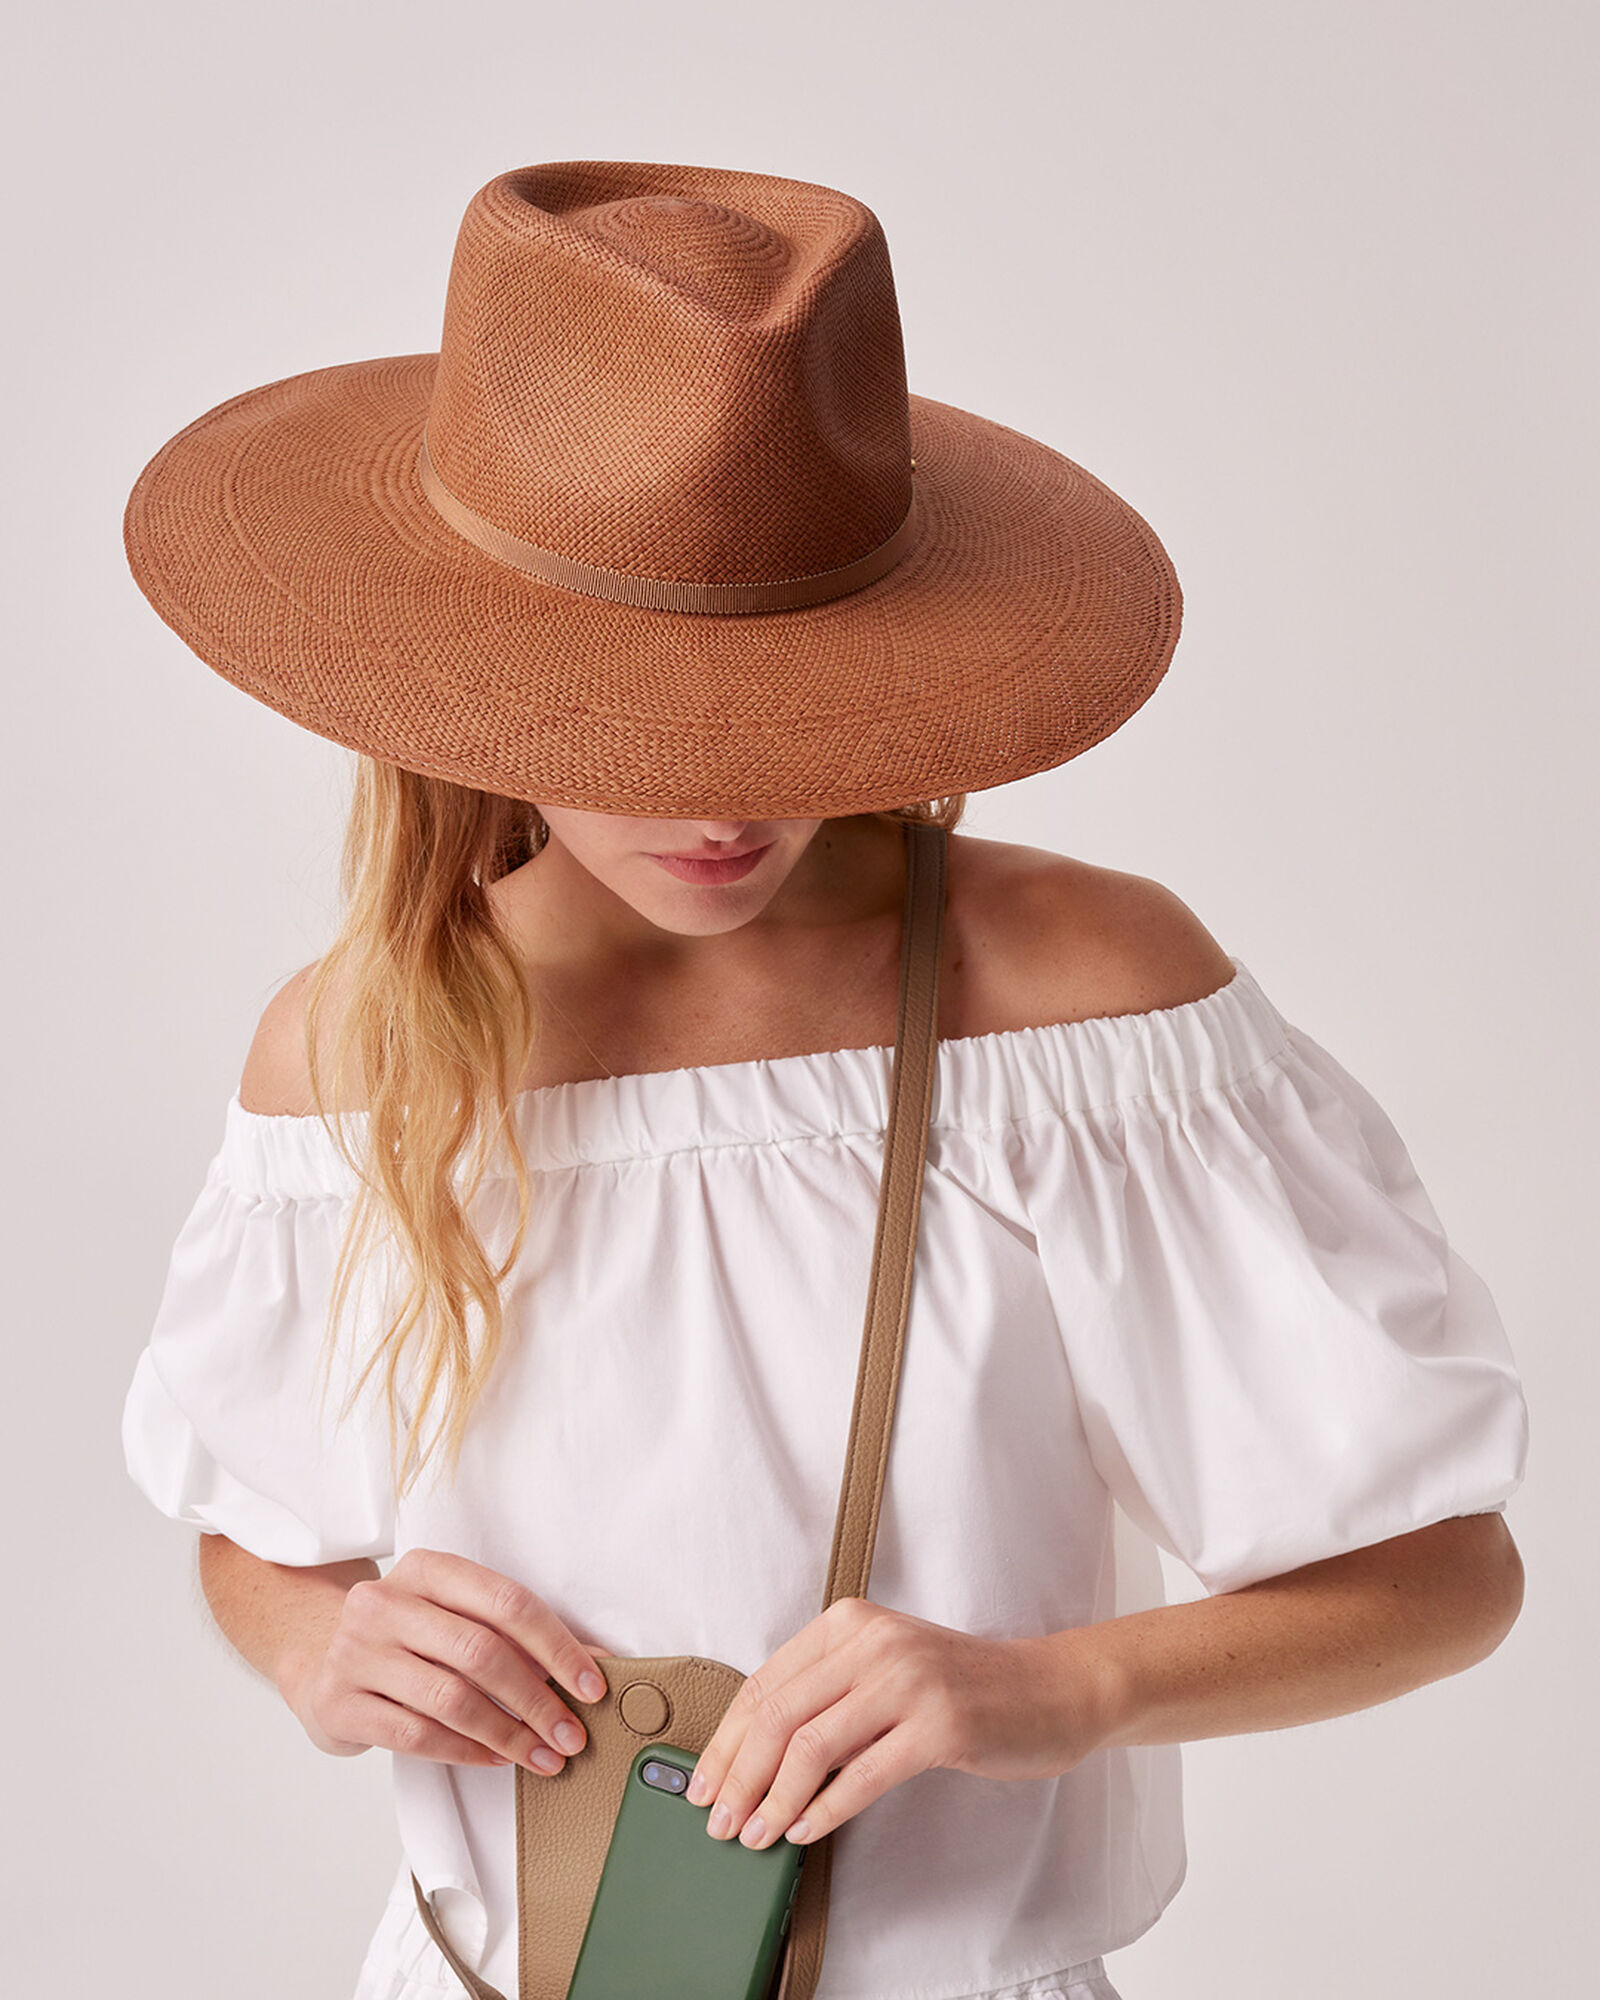 A woman models an orange wide-brimmed straw hat